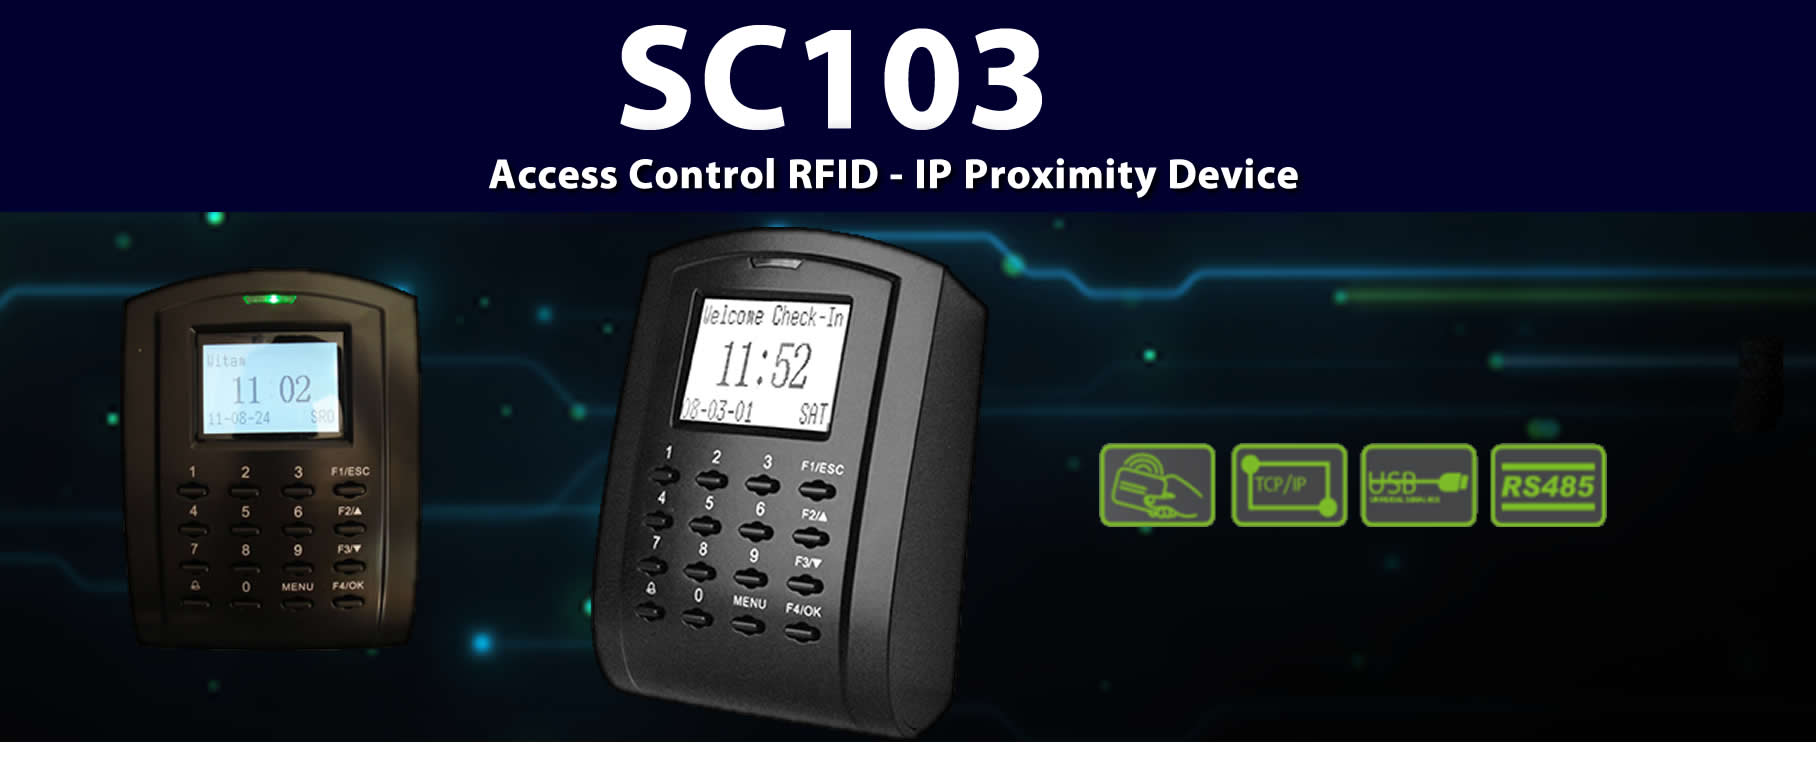 SC103 Access Control RFID - IP Proximity Device